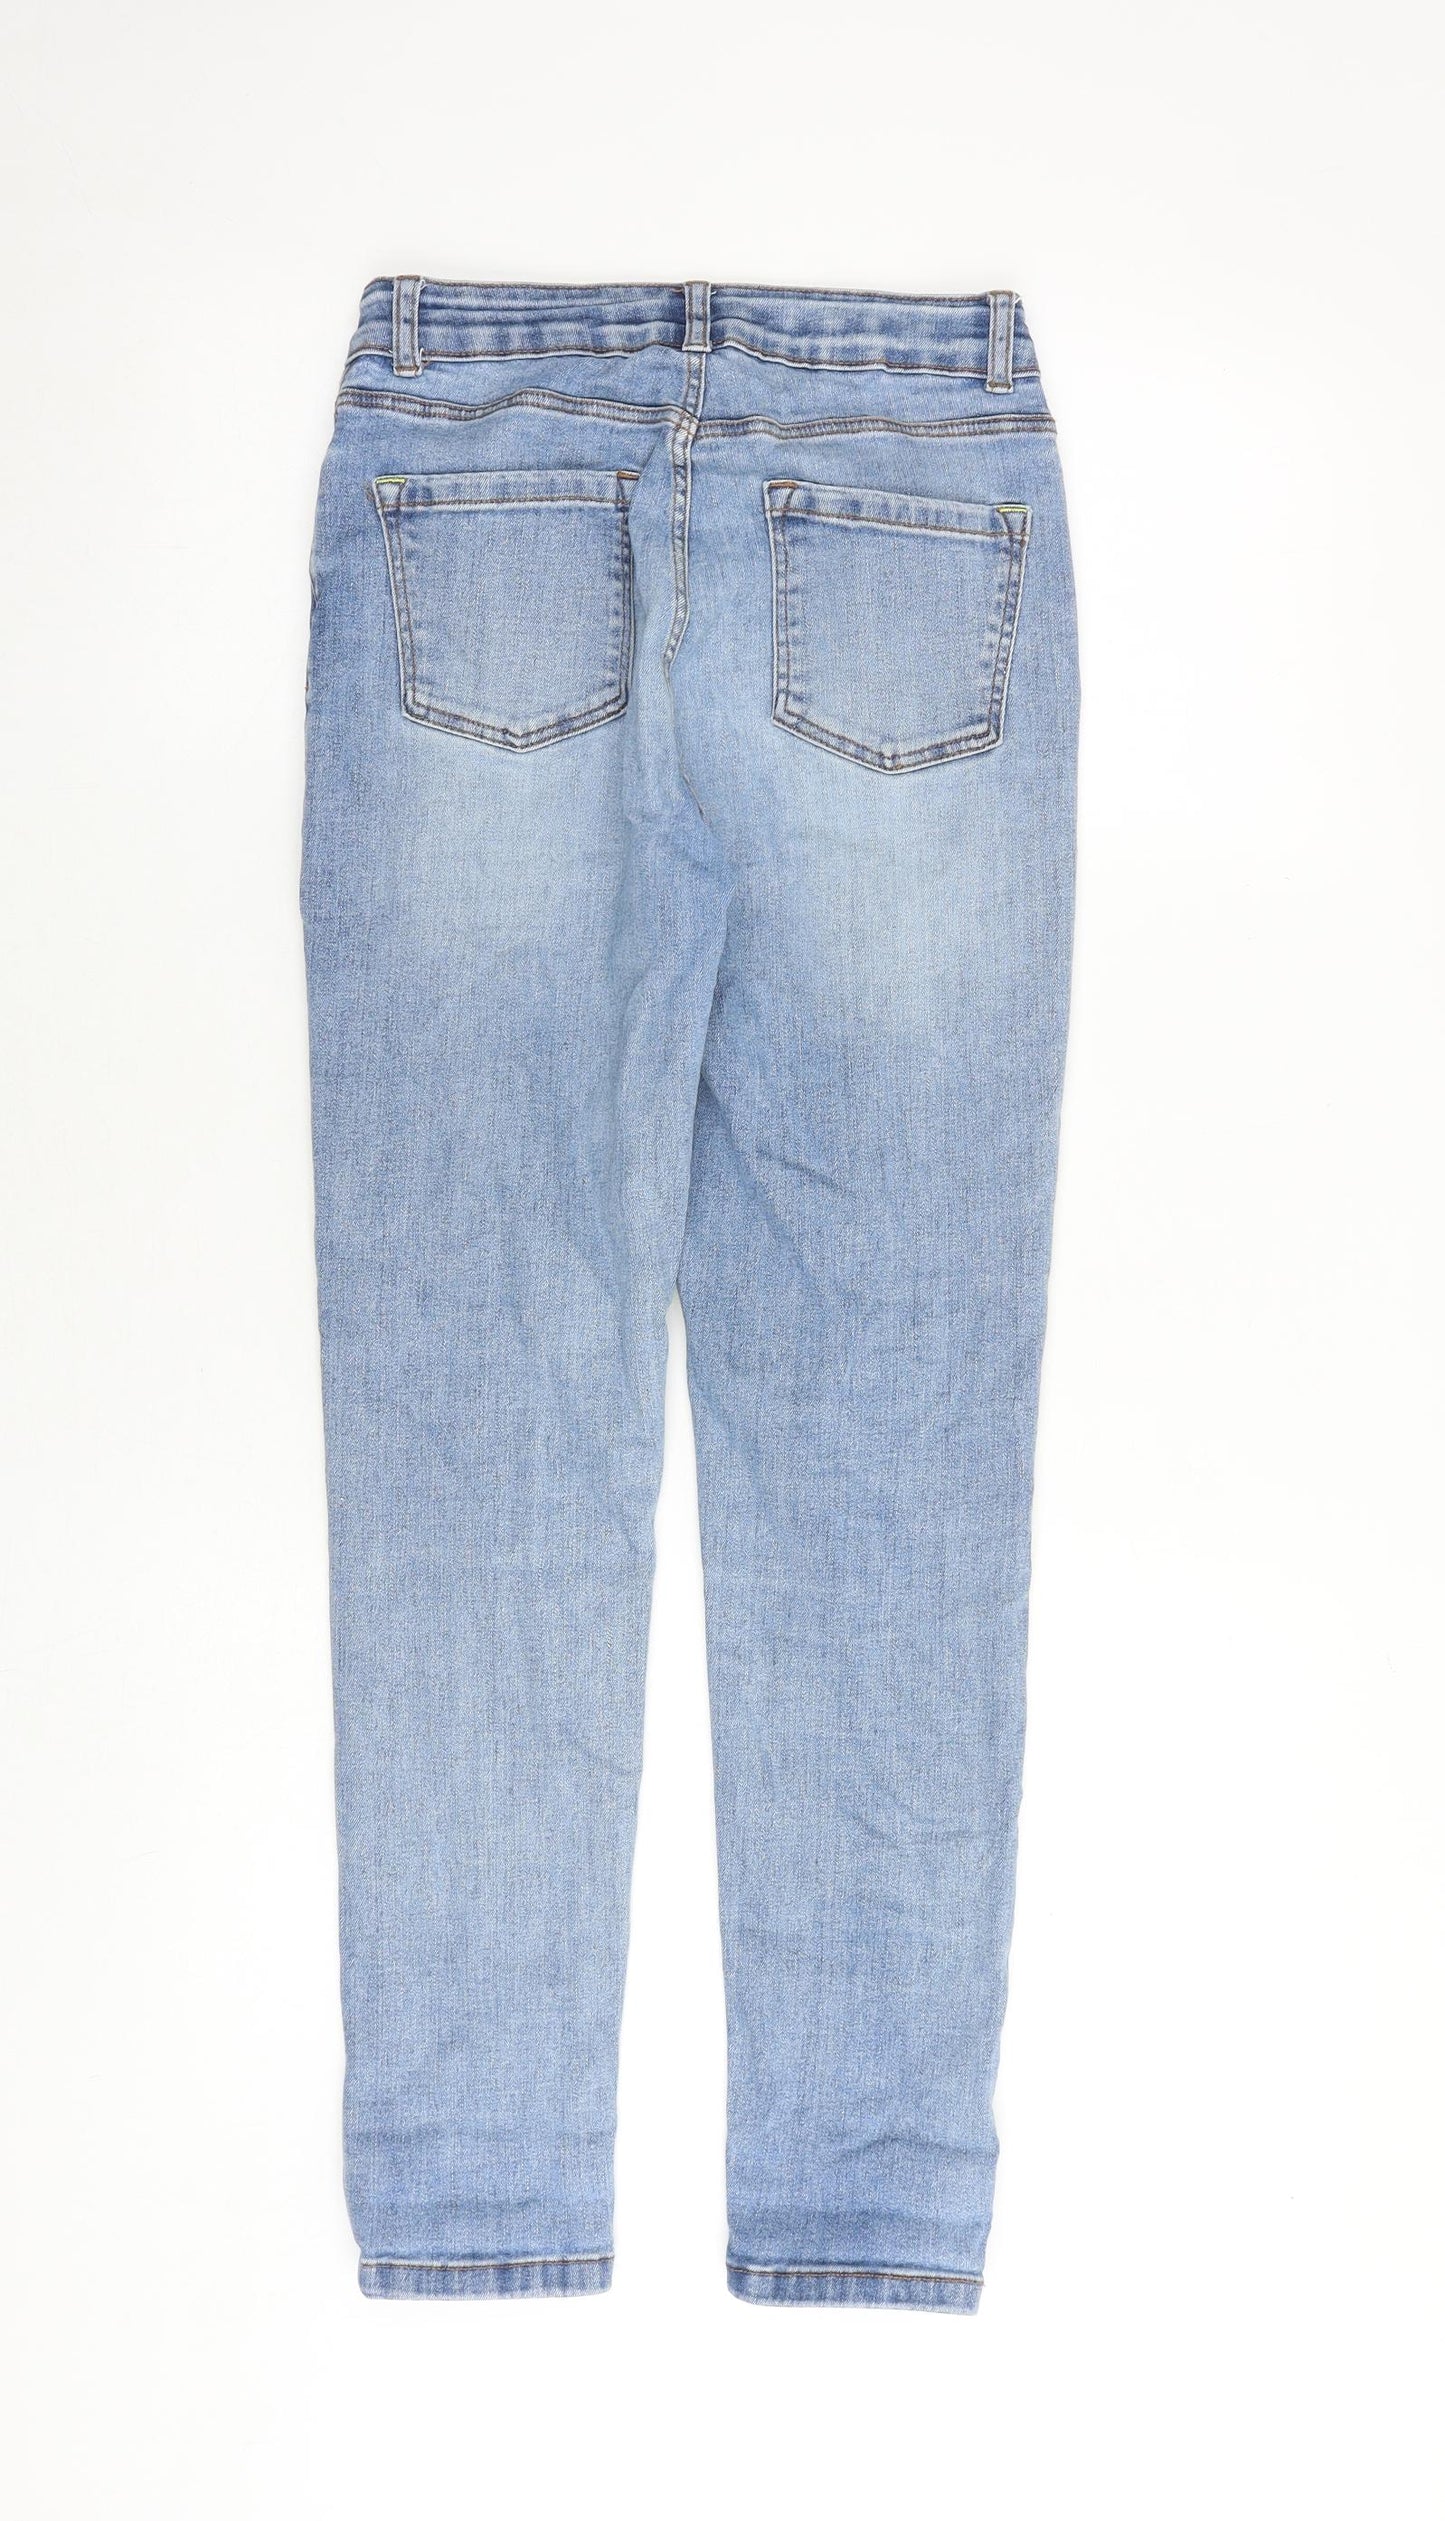 Boden Girls Blue Cotton Skinny Jeans Size 13 Years Slim Zip